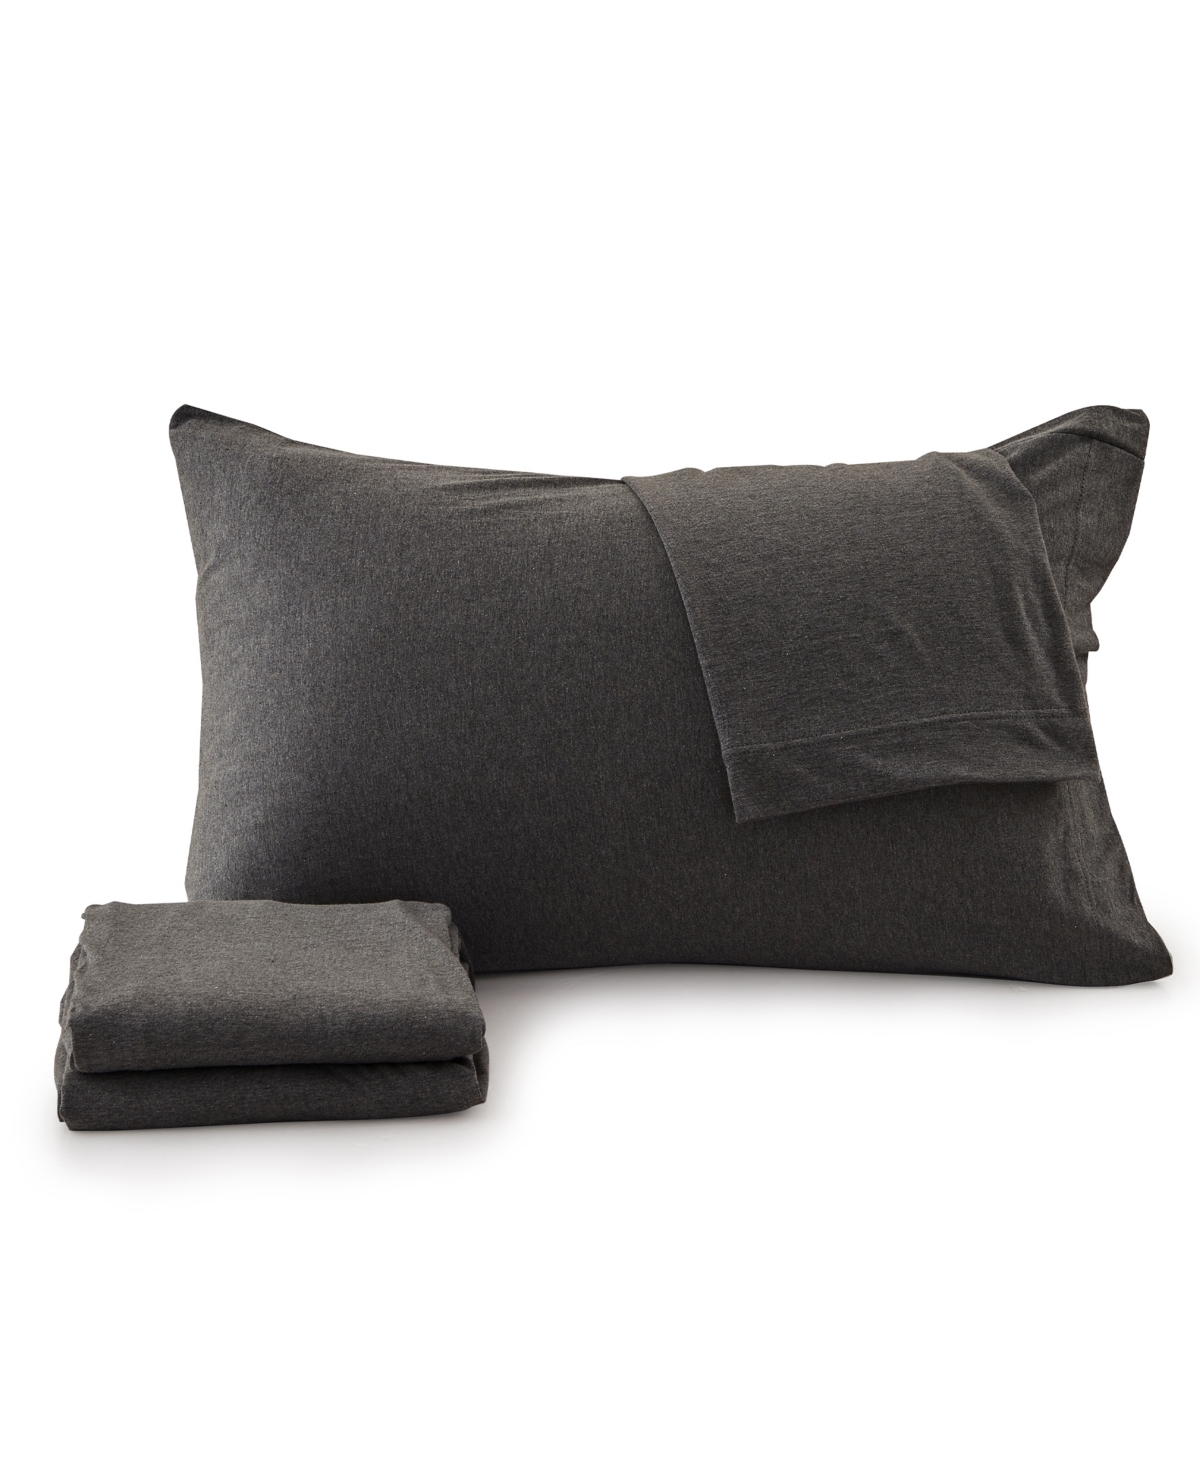 Premium Comforts Heathered Melange T-shirt Jersey Knit Cotton Blend 3 Piece Sheet Set, Twin In Charcoal